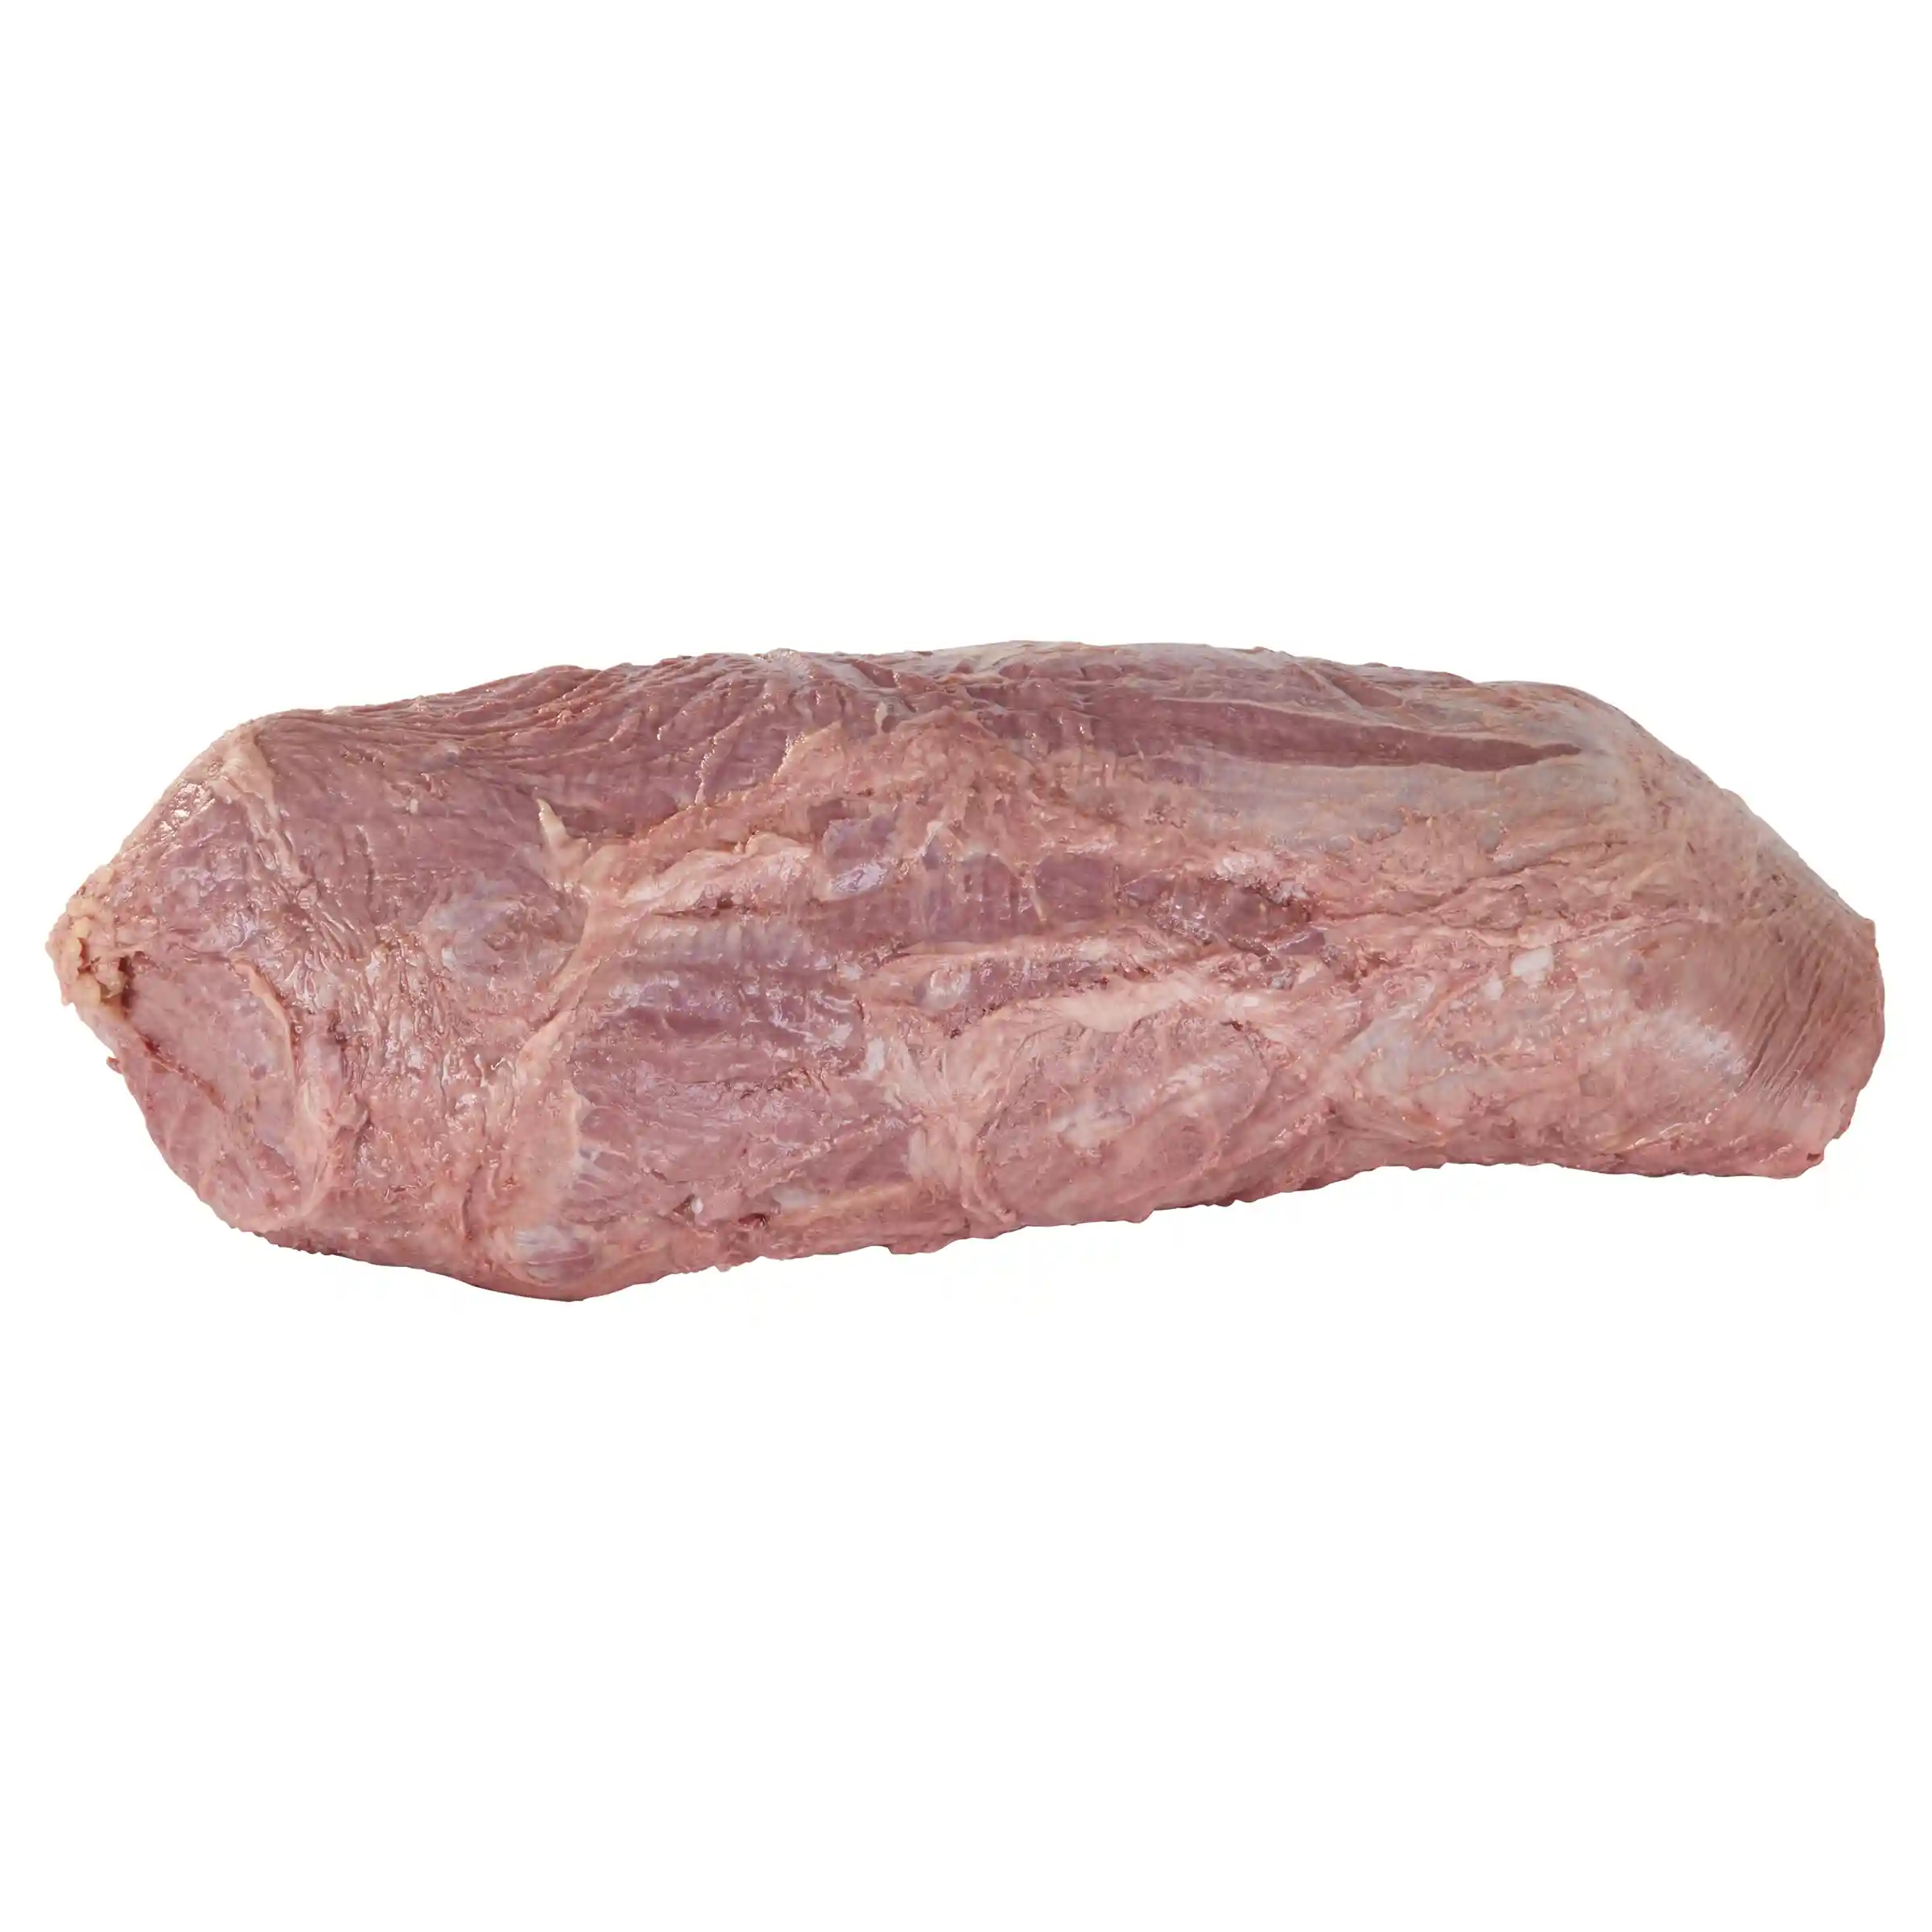 Briar Street Market® Whole Muscle Corned Beef Fully Cooked https://images.salsify.com/image/upload/s--5OoUjfK8--/q_25/l5tyefur4jzazauyt4ar.webp